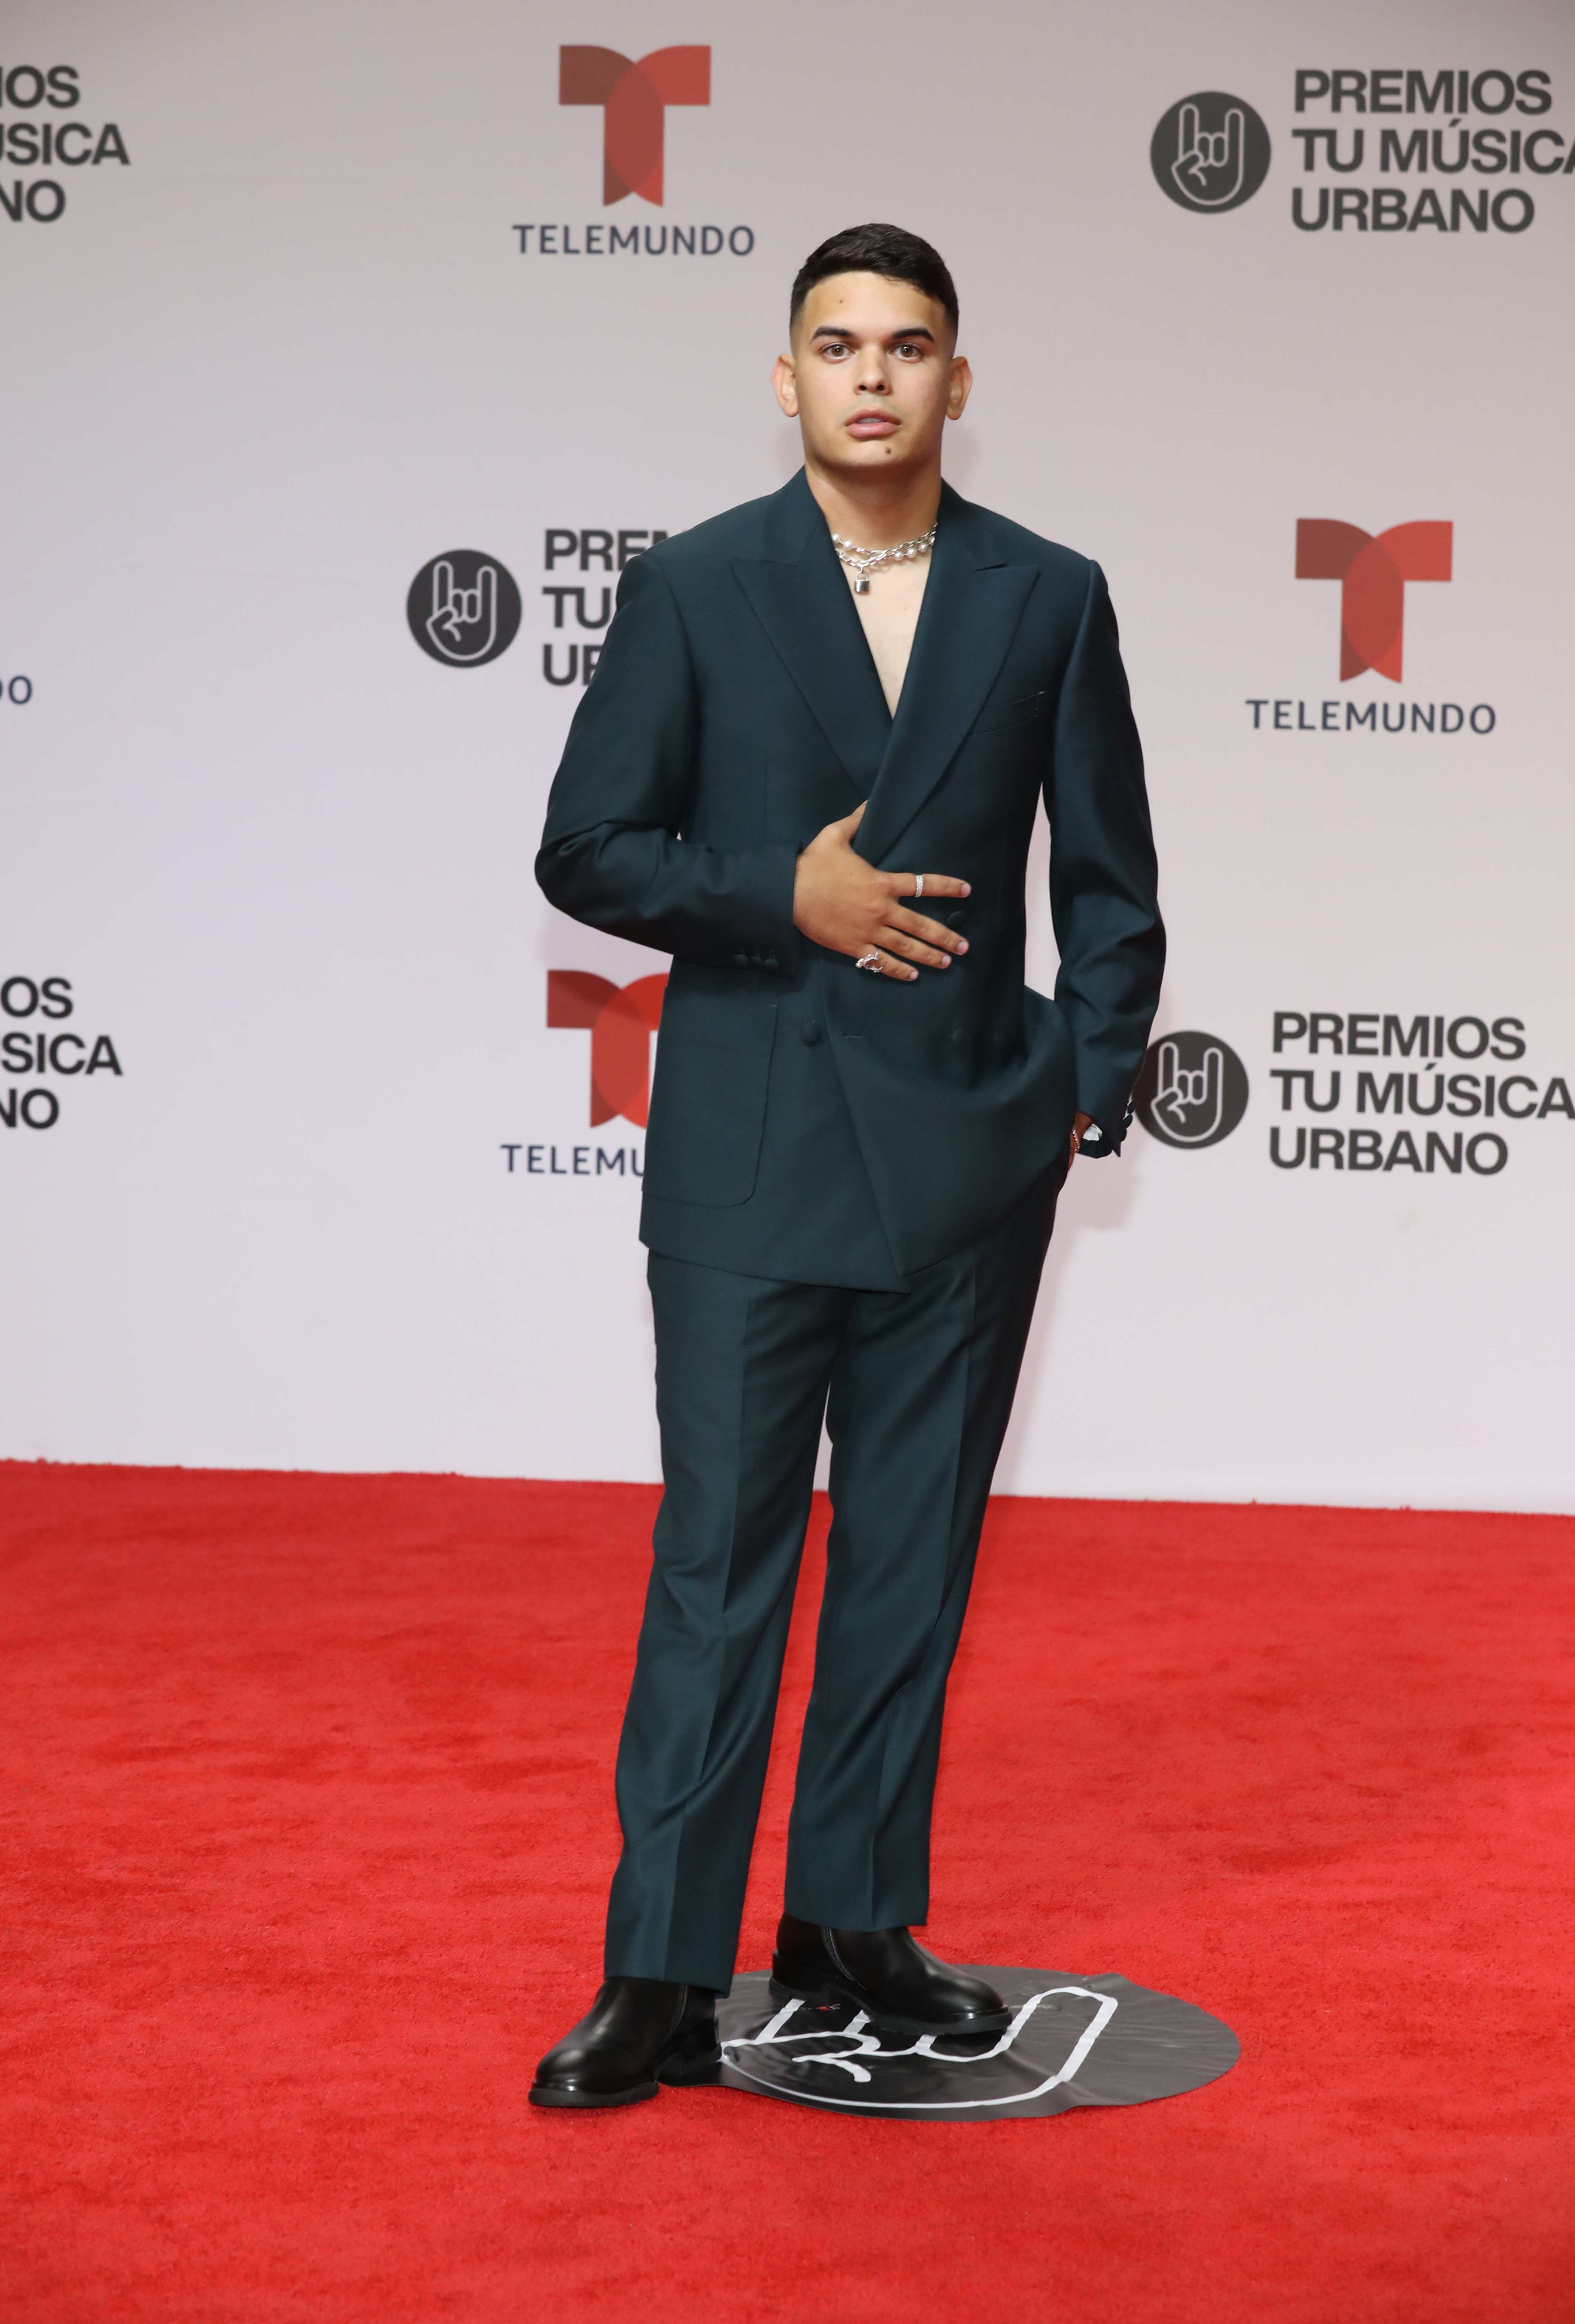 Jeremy Ayala González at the Premios Tu Música Urbano awards on June 23, 2022, in San Juan | Source: Getty Images